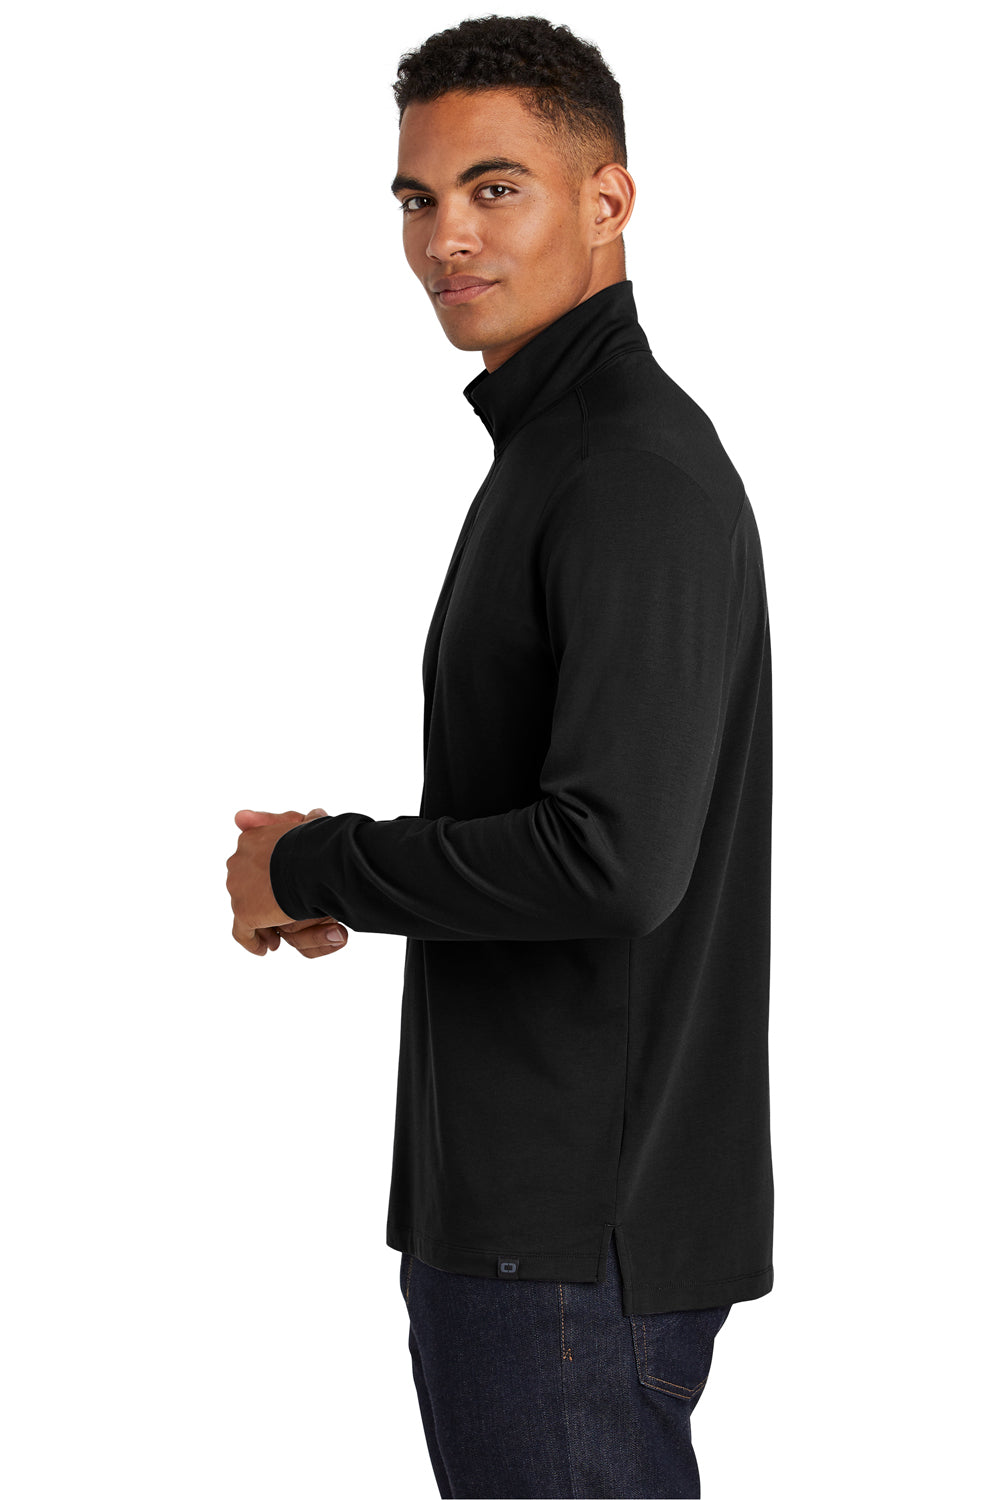 Ogio OG139 Mens Limit Moisture Wicking 1/4 Zip Sweatshirt Black Side